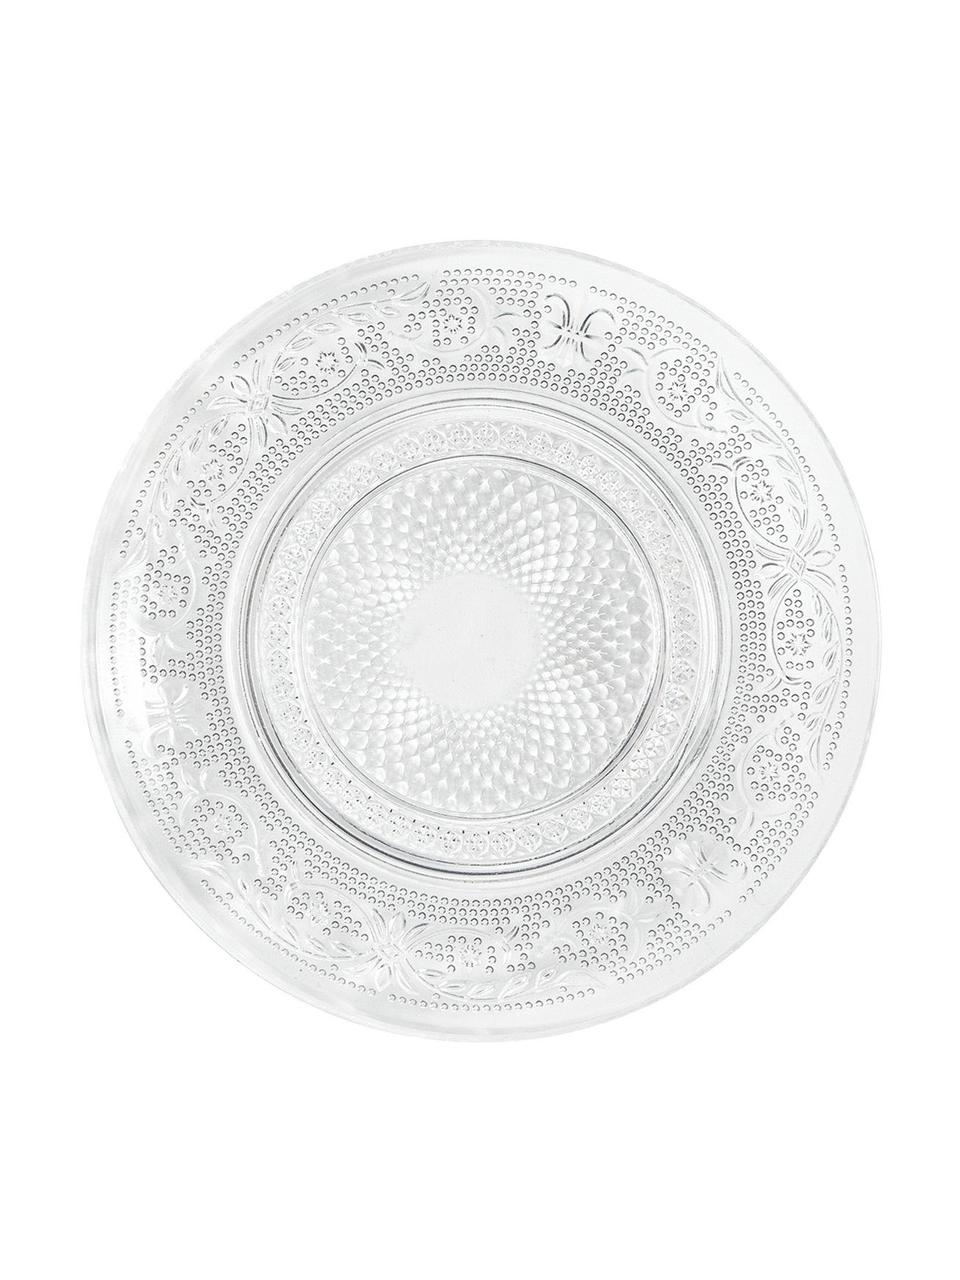 Glazen broodborden Imperial, 6 stuks, Glas, Transparant, Ø 15 cm